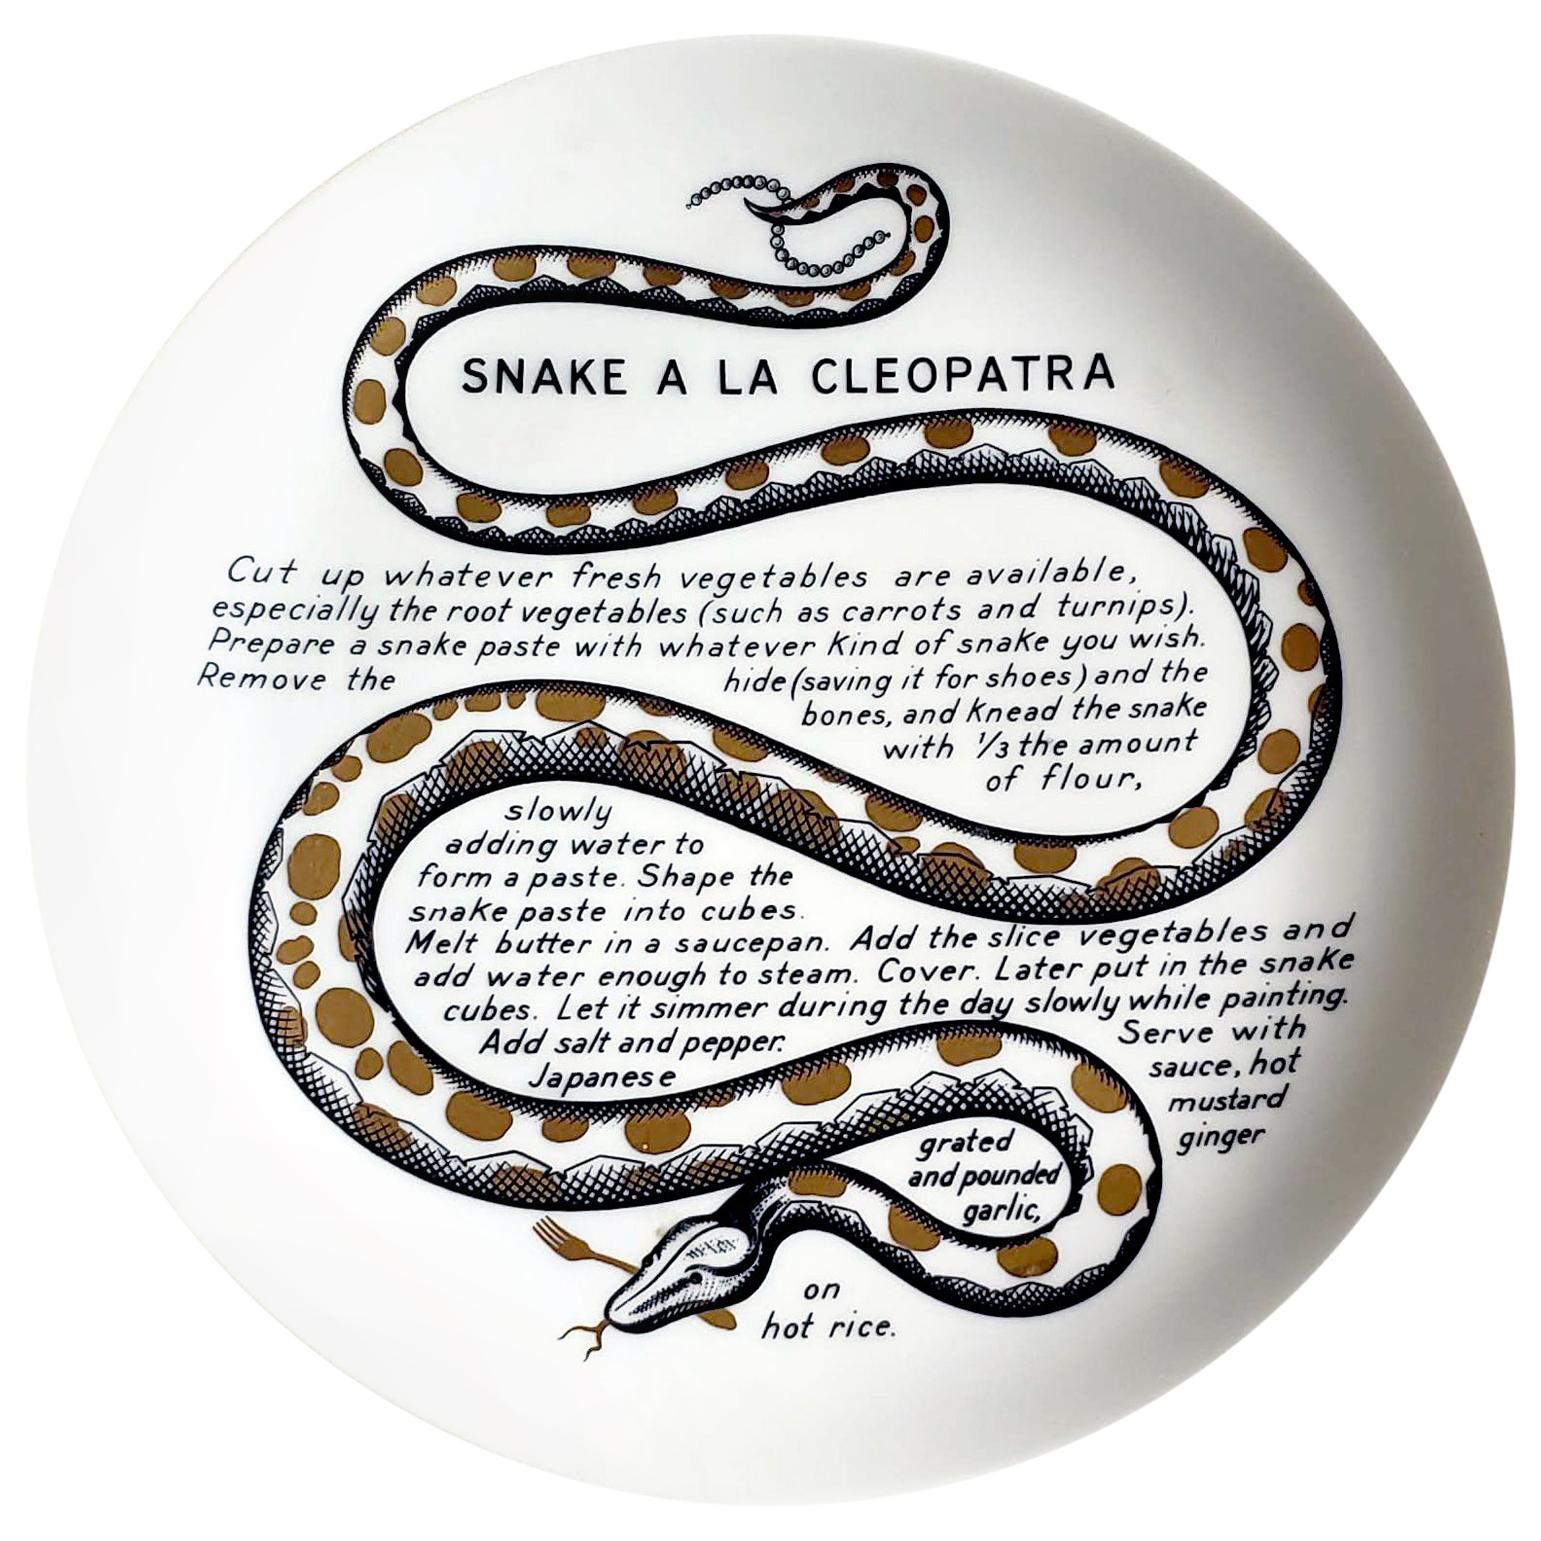 Piero Fornasetti Fleming Joffe Porcelain Recipe Plate, Snake a la Cleopatra